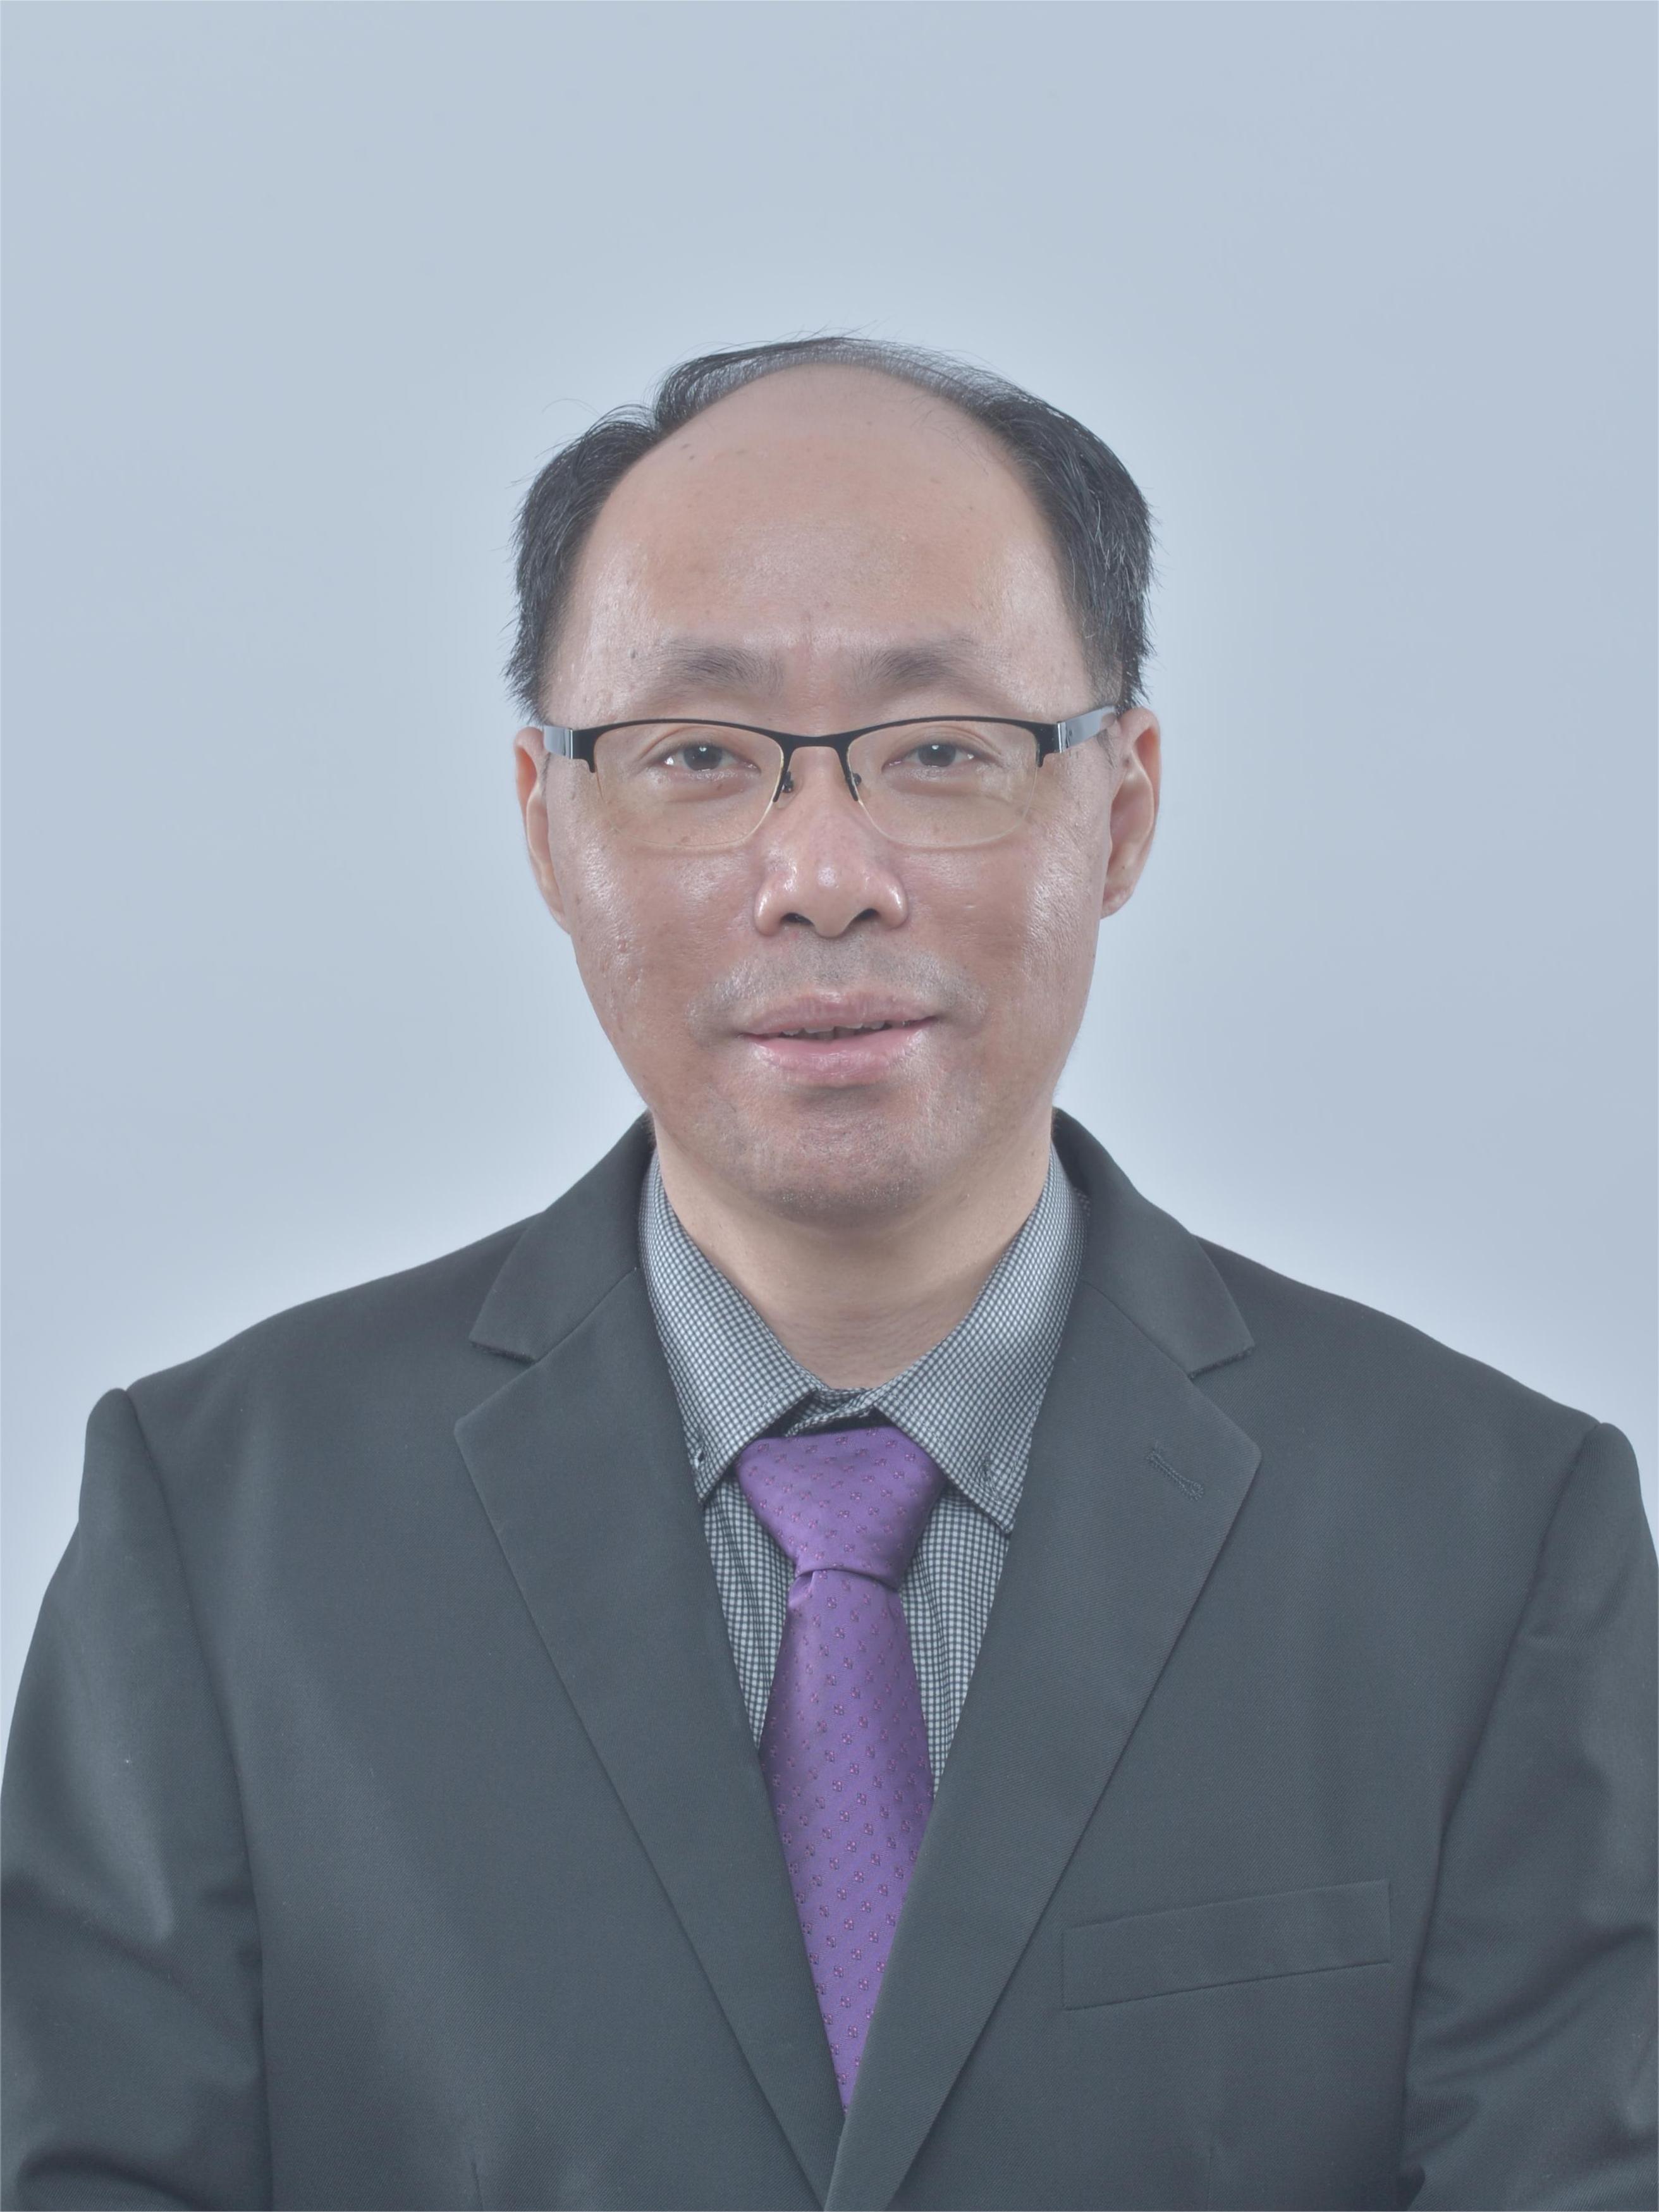 Michael Khoo Boon Chong